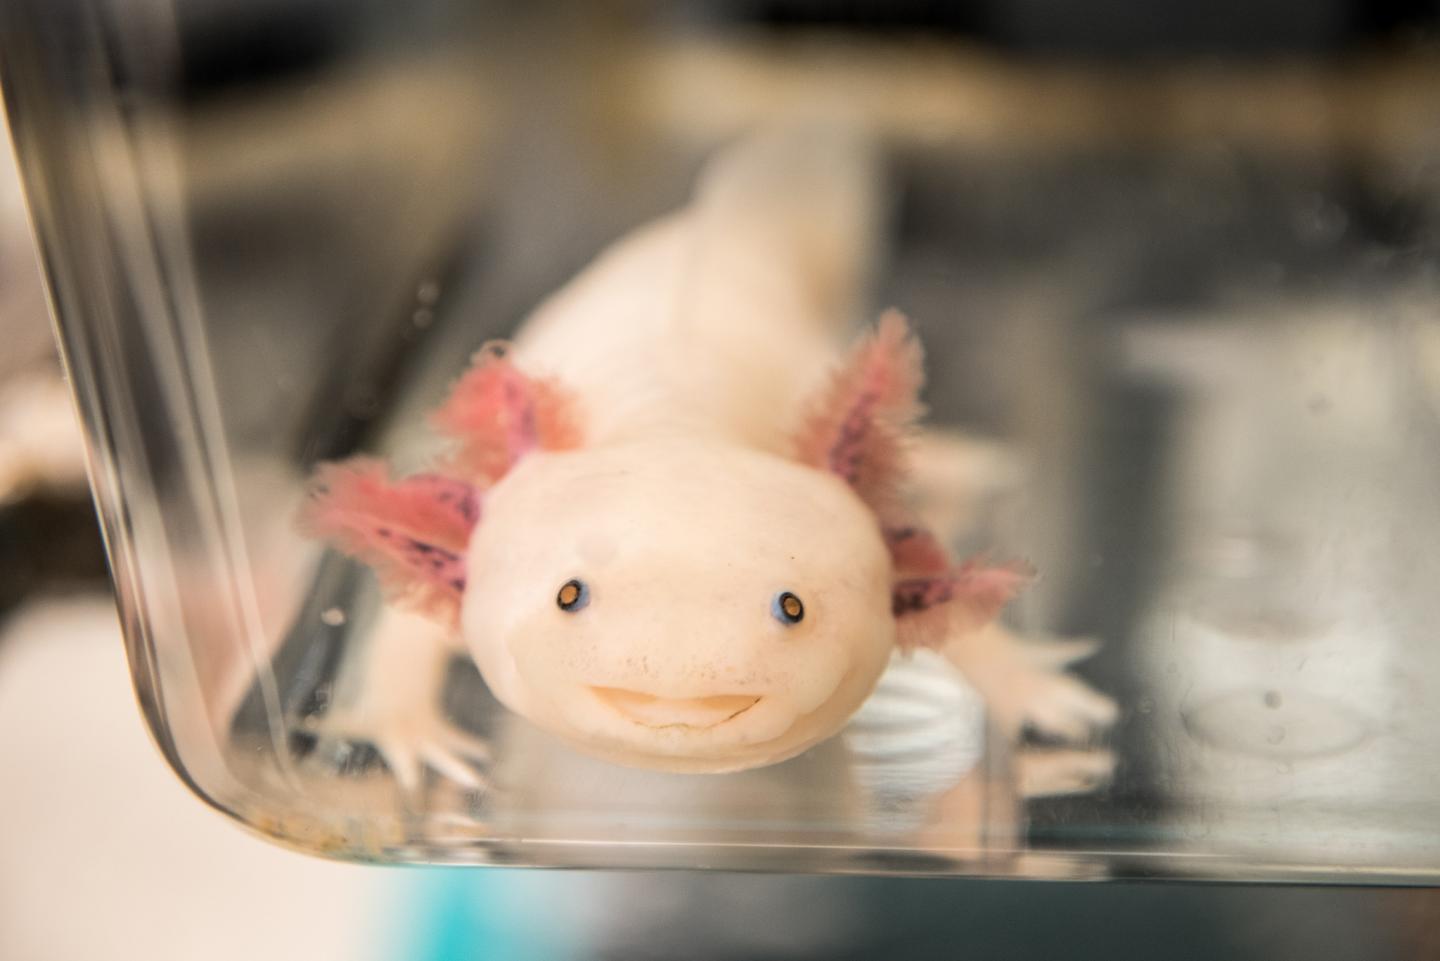 Axolotl, or Mexican Salamander